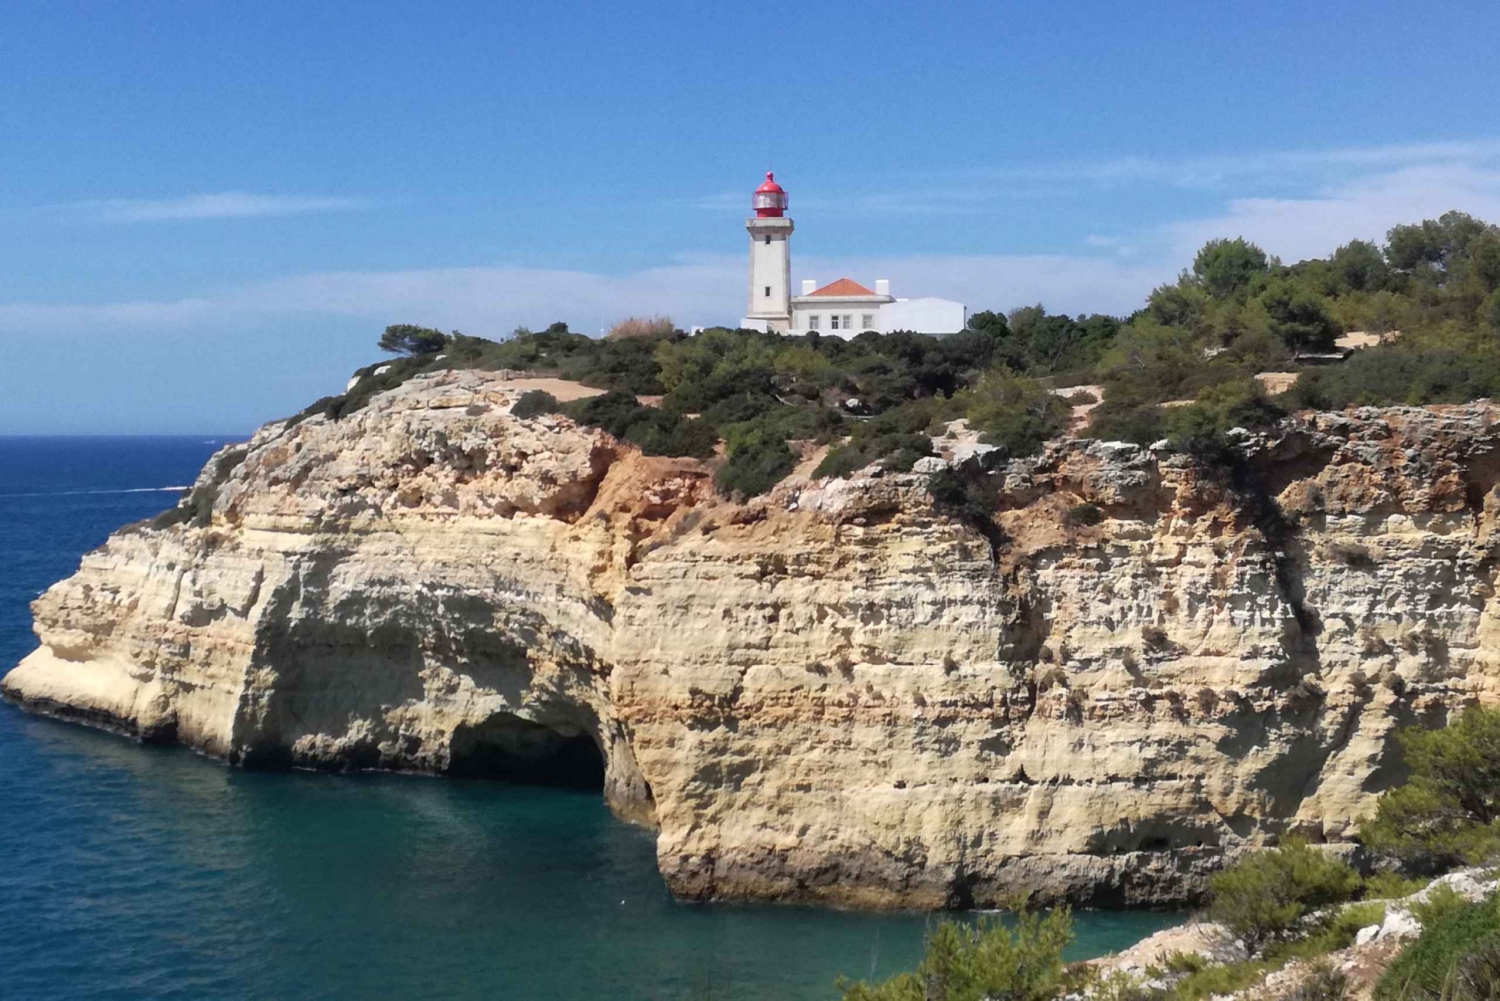 Algarve: Carvoerio and Benagil Walking Tour and Cruise